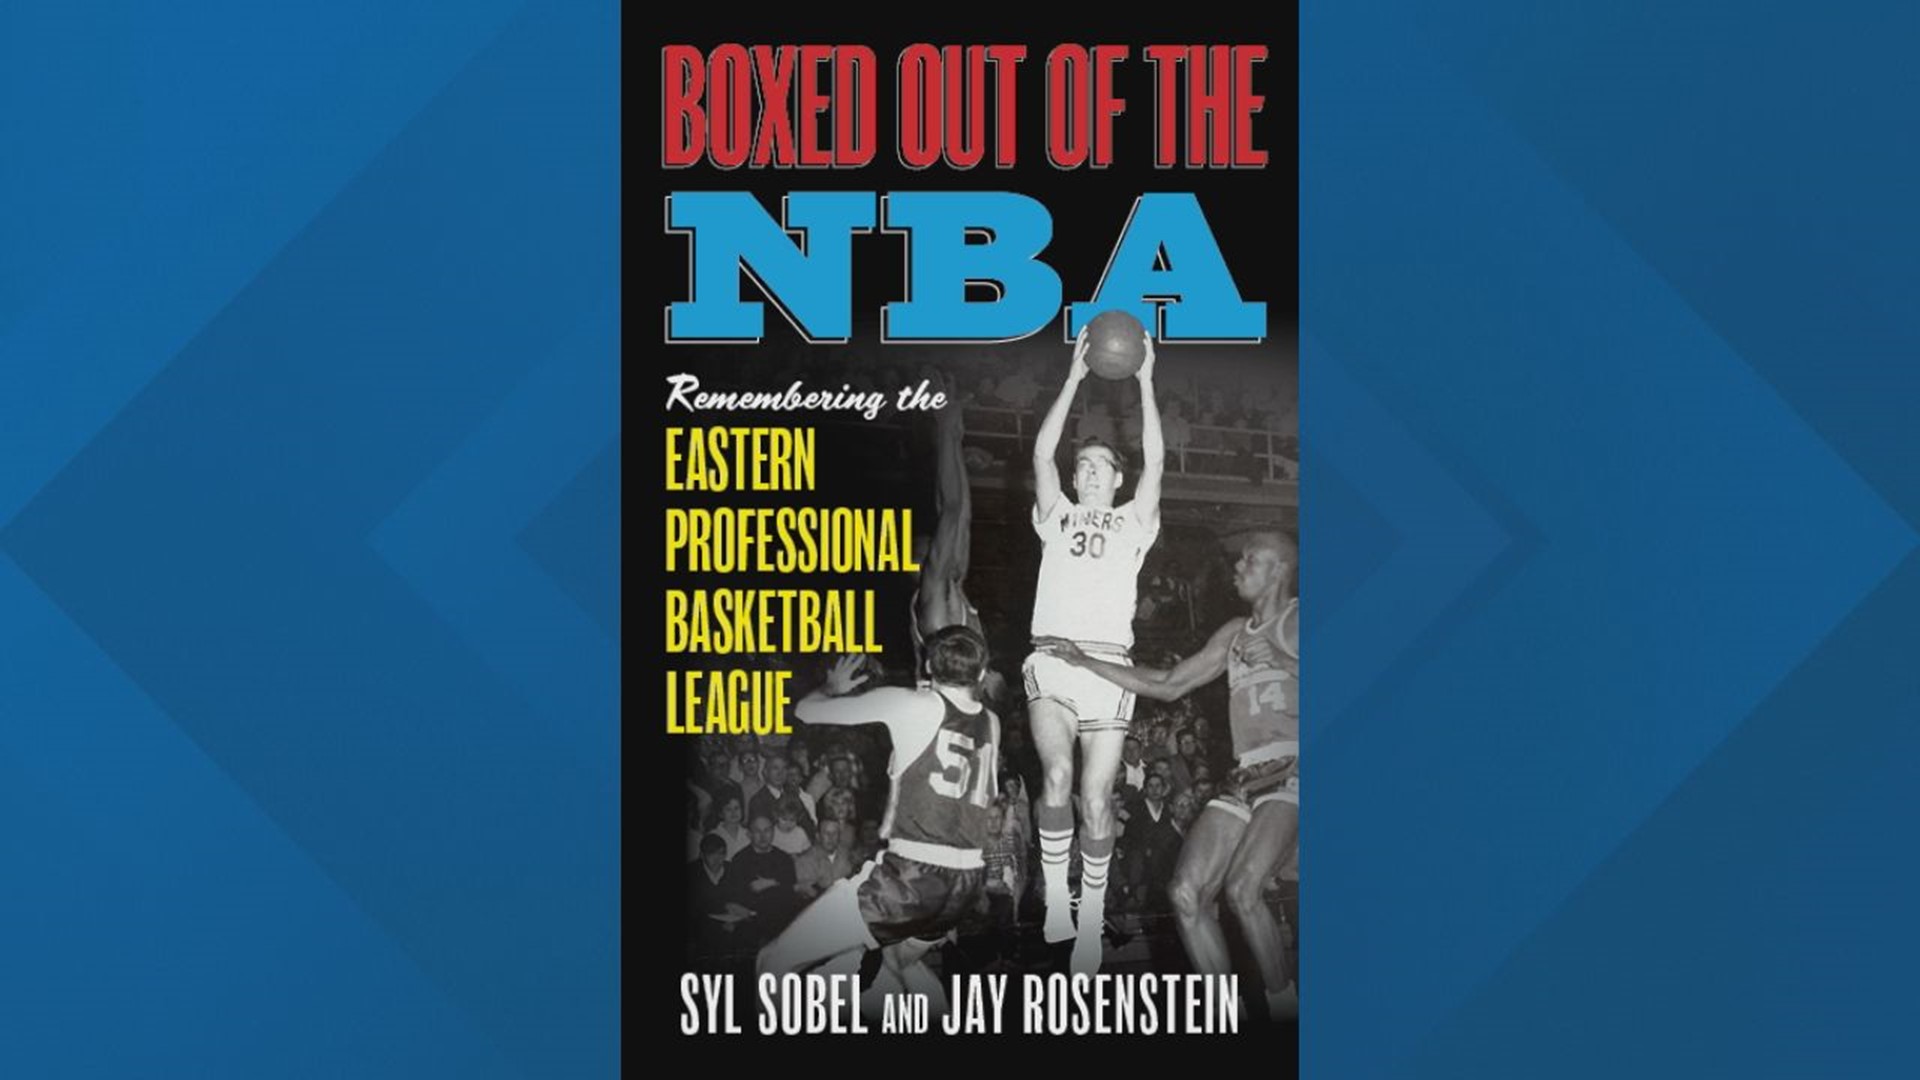 Sobel, Rosenstein Document Eastern Basketball League History in new Book